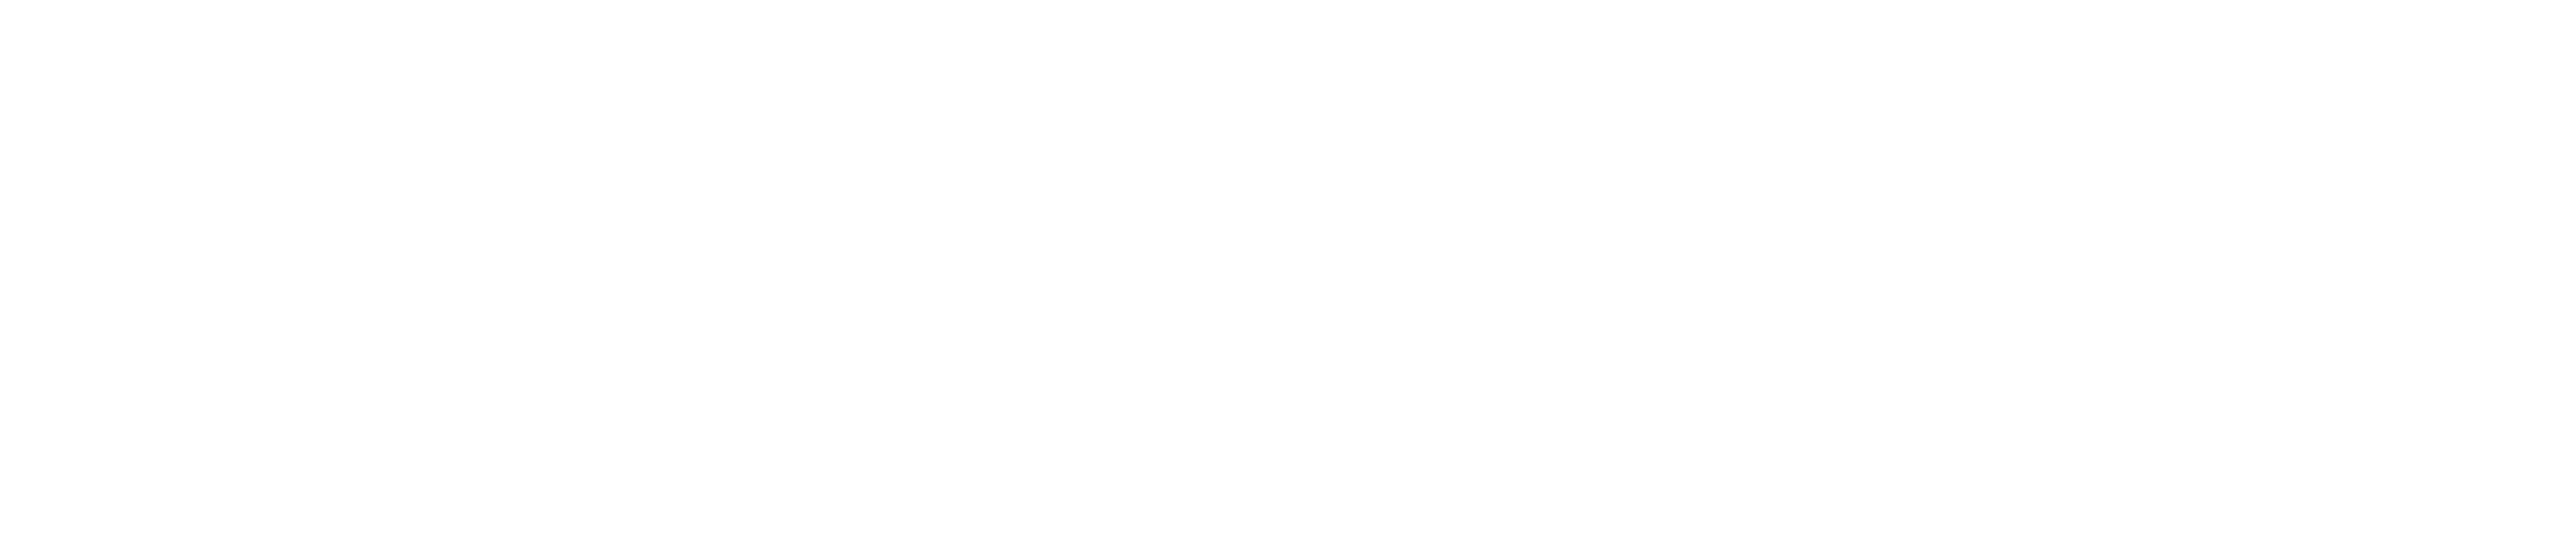 Elder Law Firm